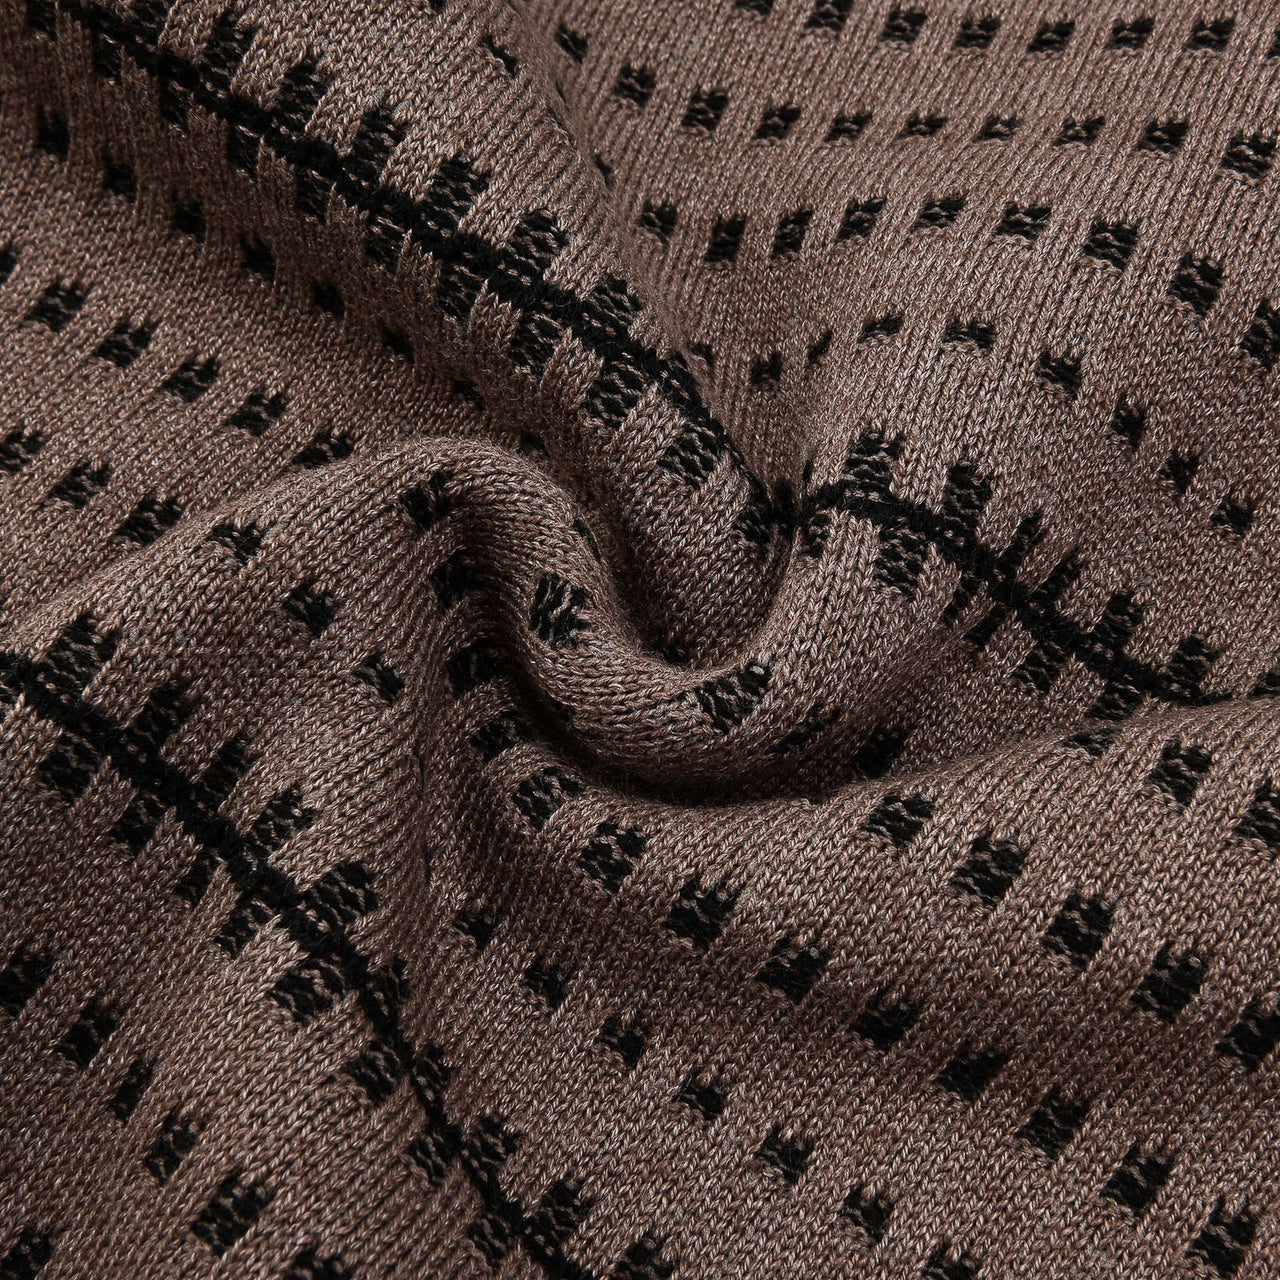 Striped Sweater - Kidichic